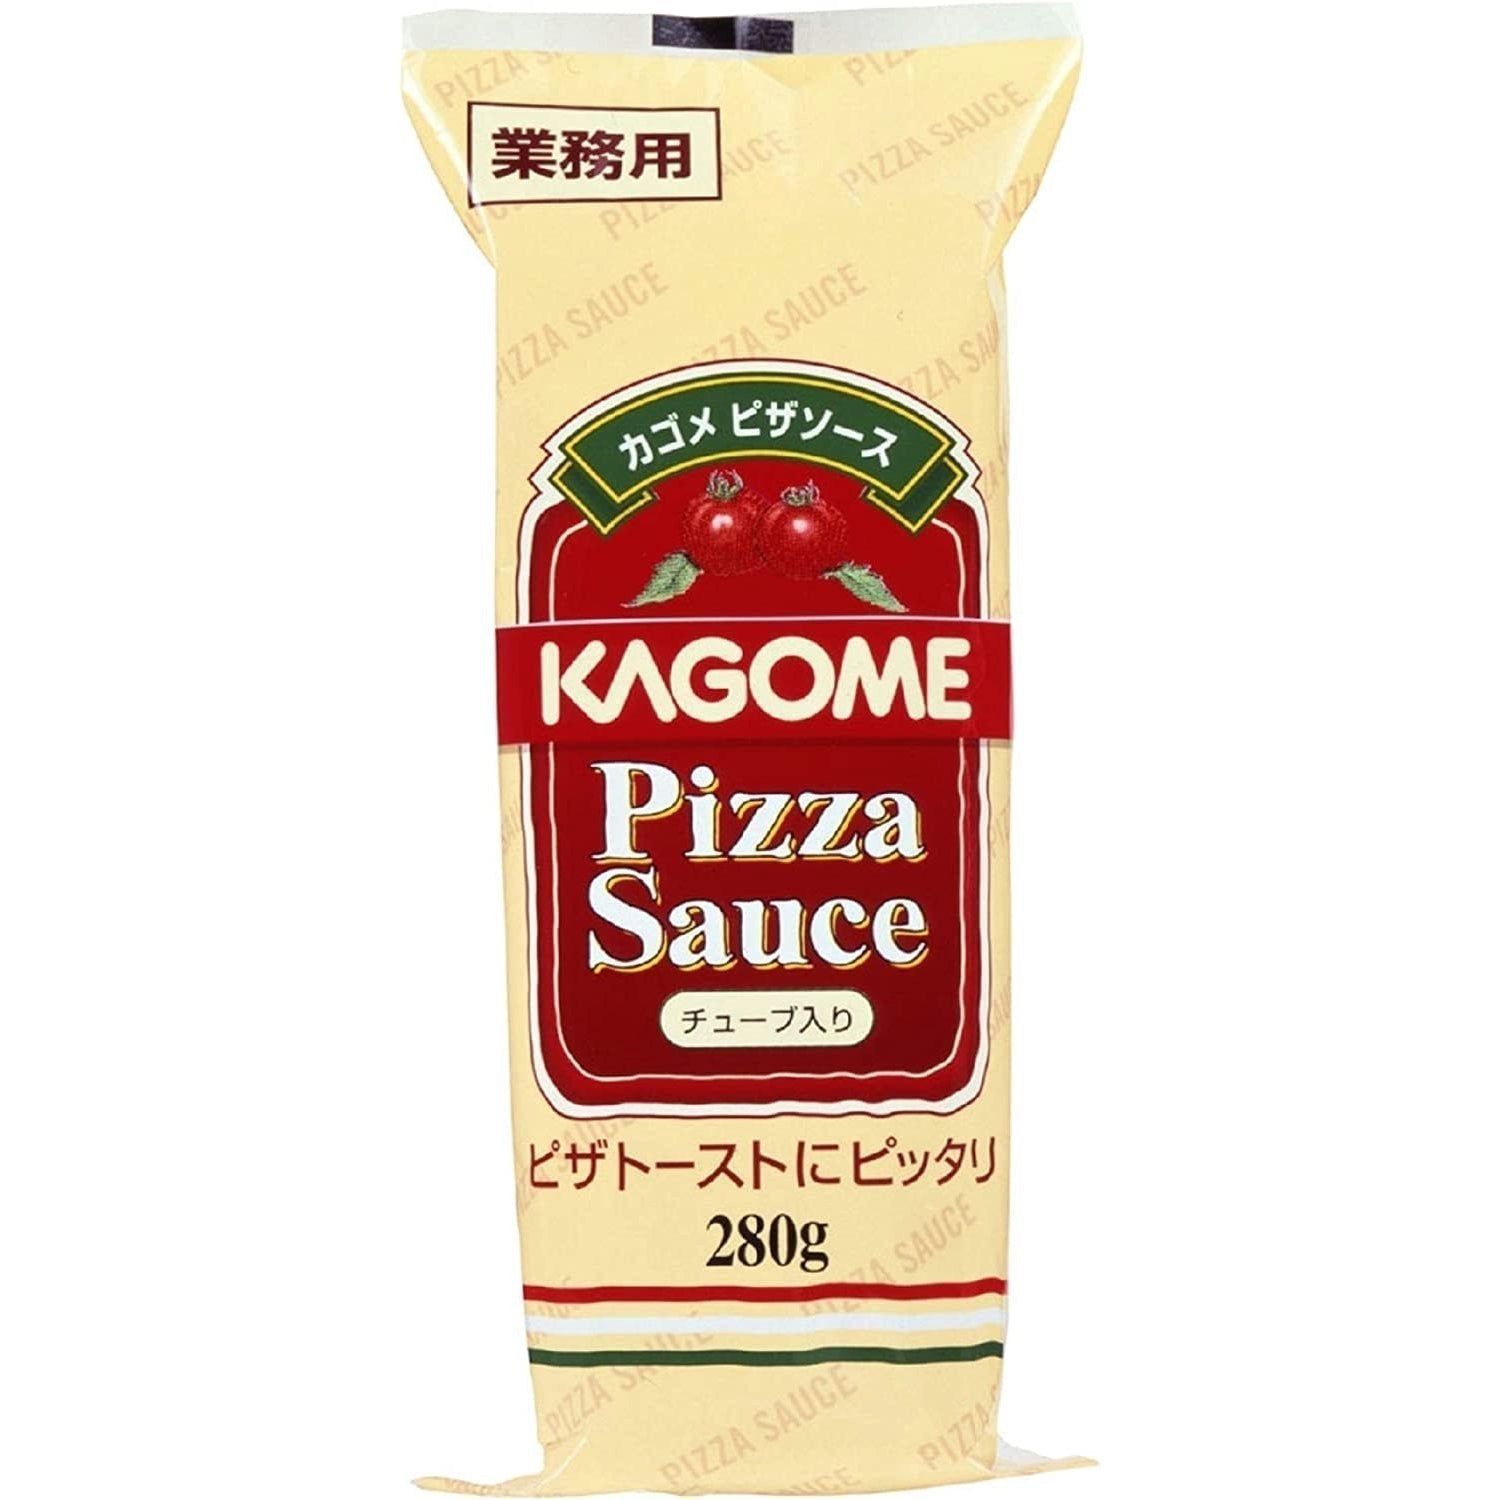 Kagome Pizza Sauce Ready to Use Tomato Puree Sauce 280g